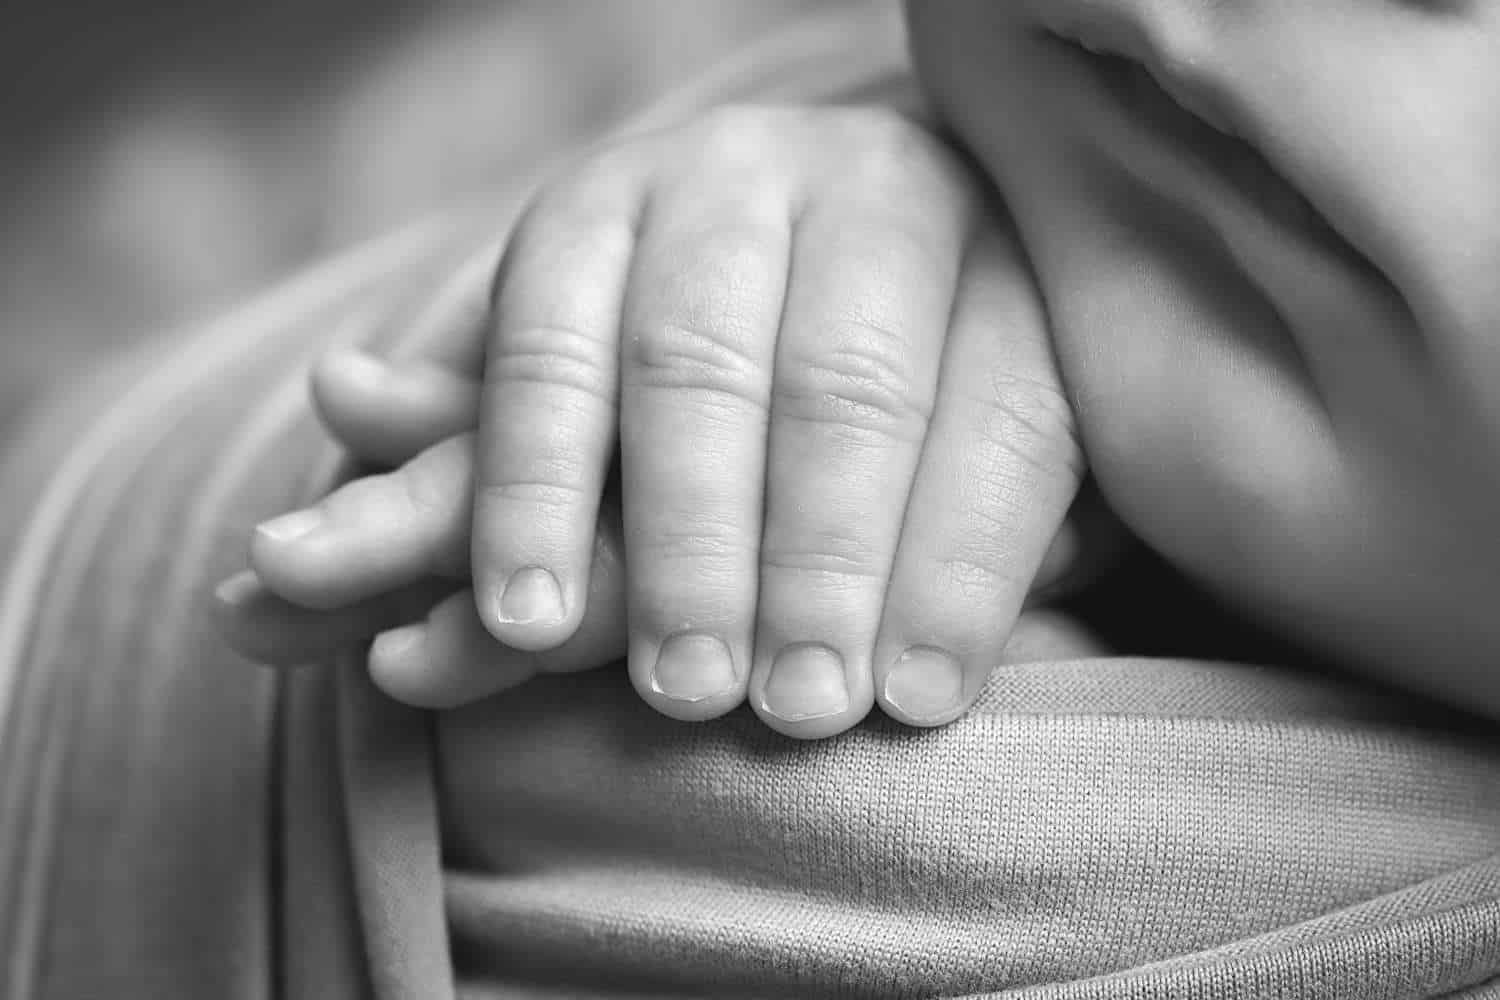 newborn photographer in rochester ny captures macros image of newborn baby boy's fingers